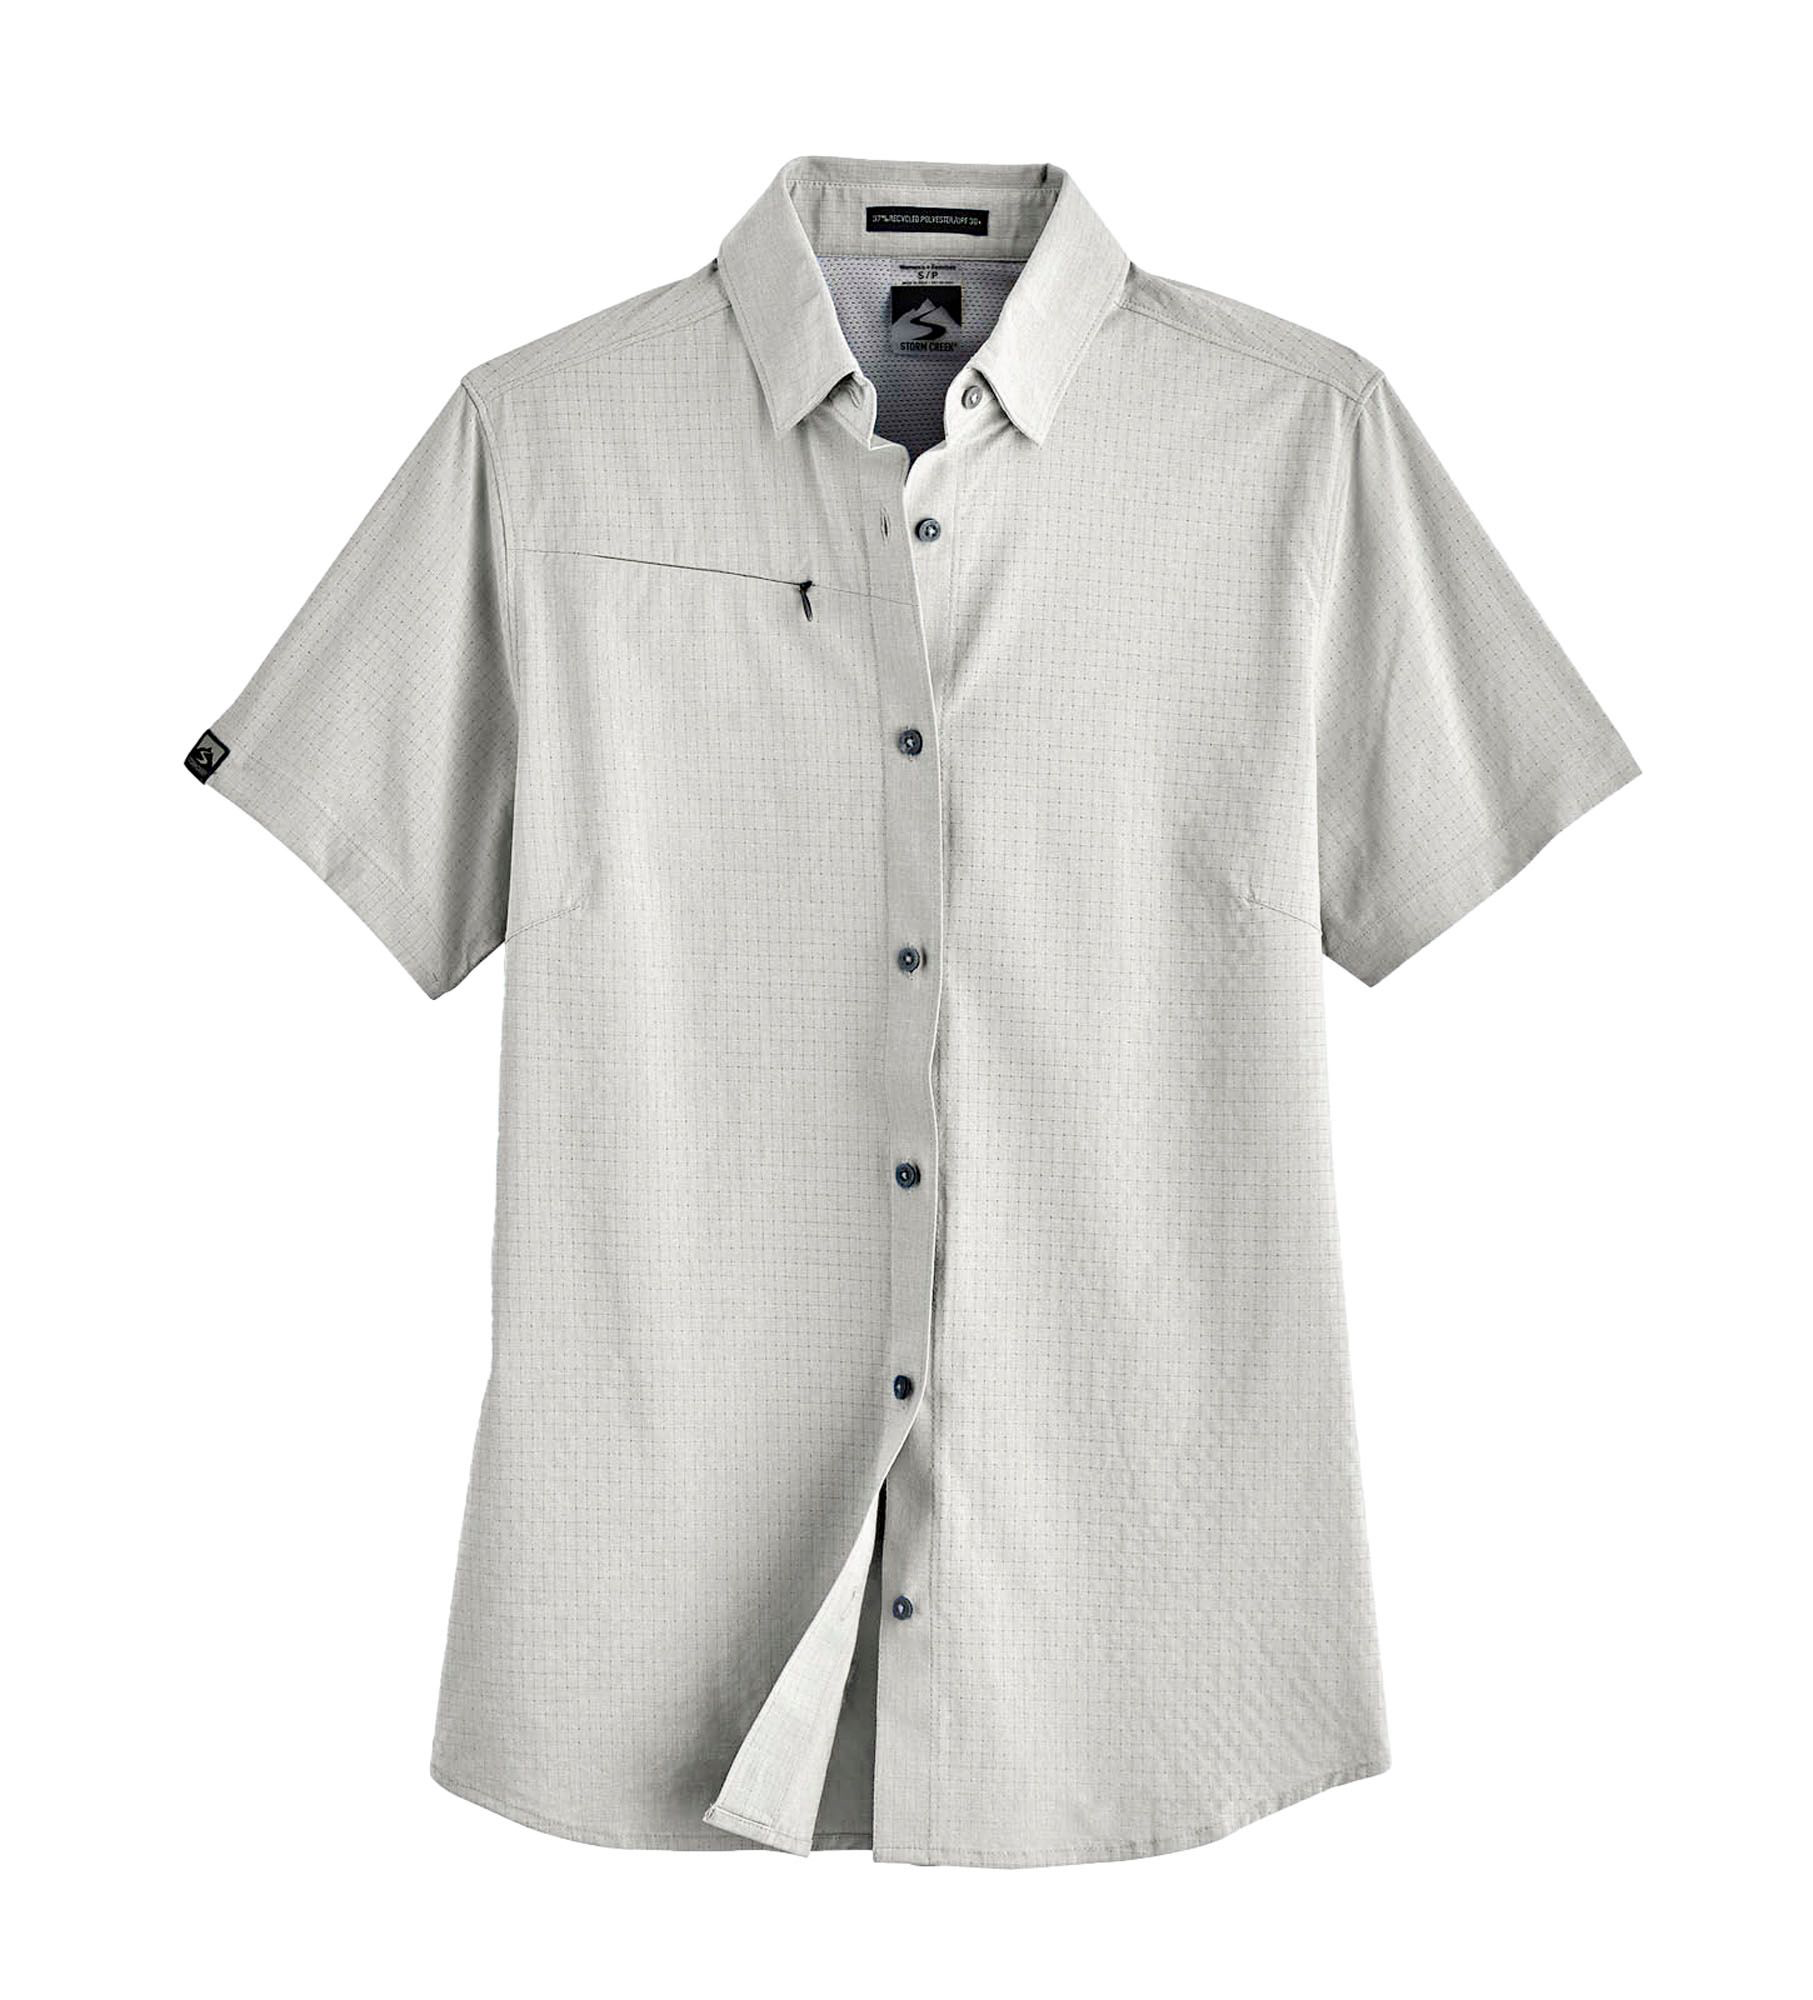 Storm Creek Naturalist Short-Sleeve Shirt for Ladies - Platinum - S